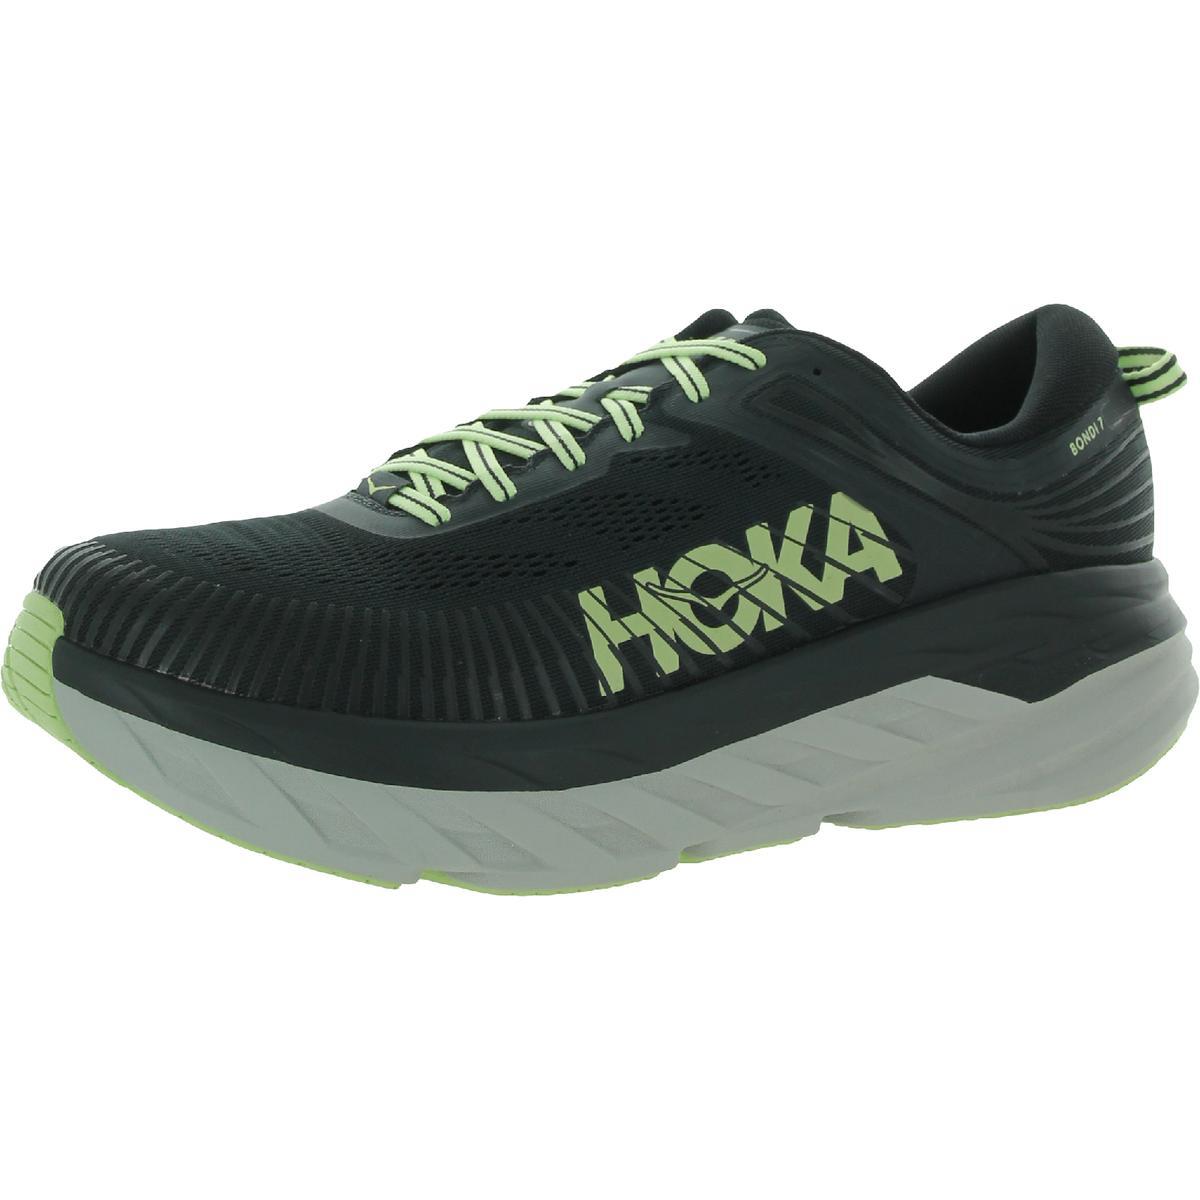 Hoka One One Mens Bondi 7 Logo Fitness Running Shoes Sneakers Bhfo 6979 Blue Graphite/Butterfly